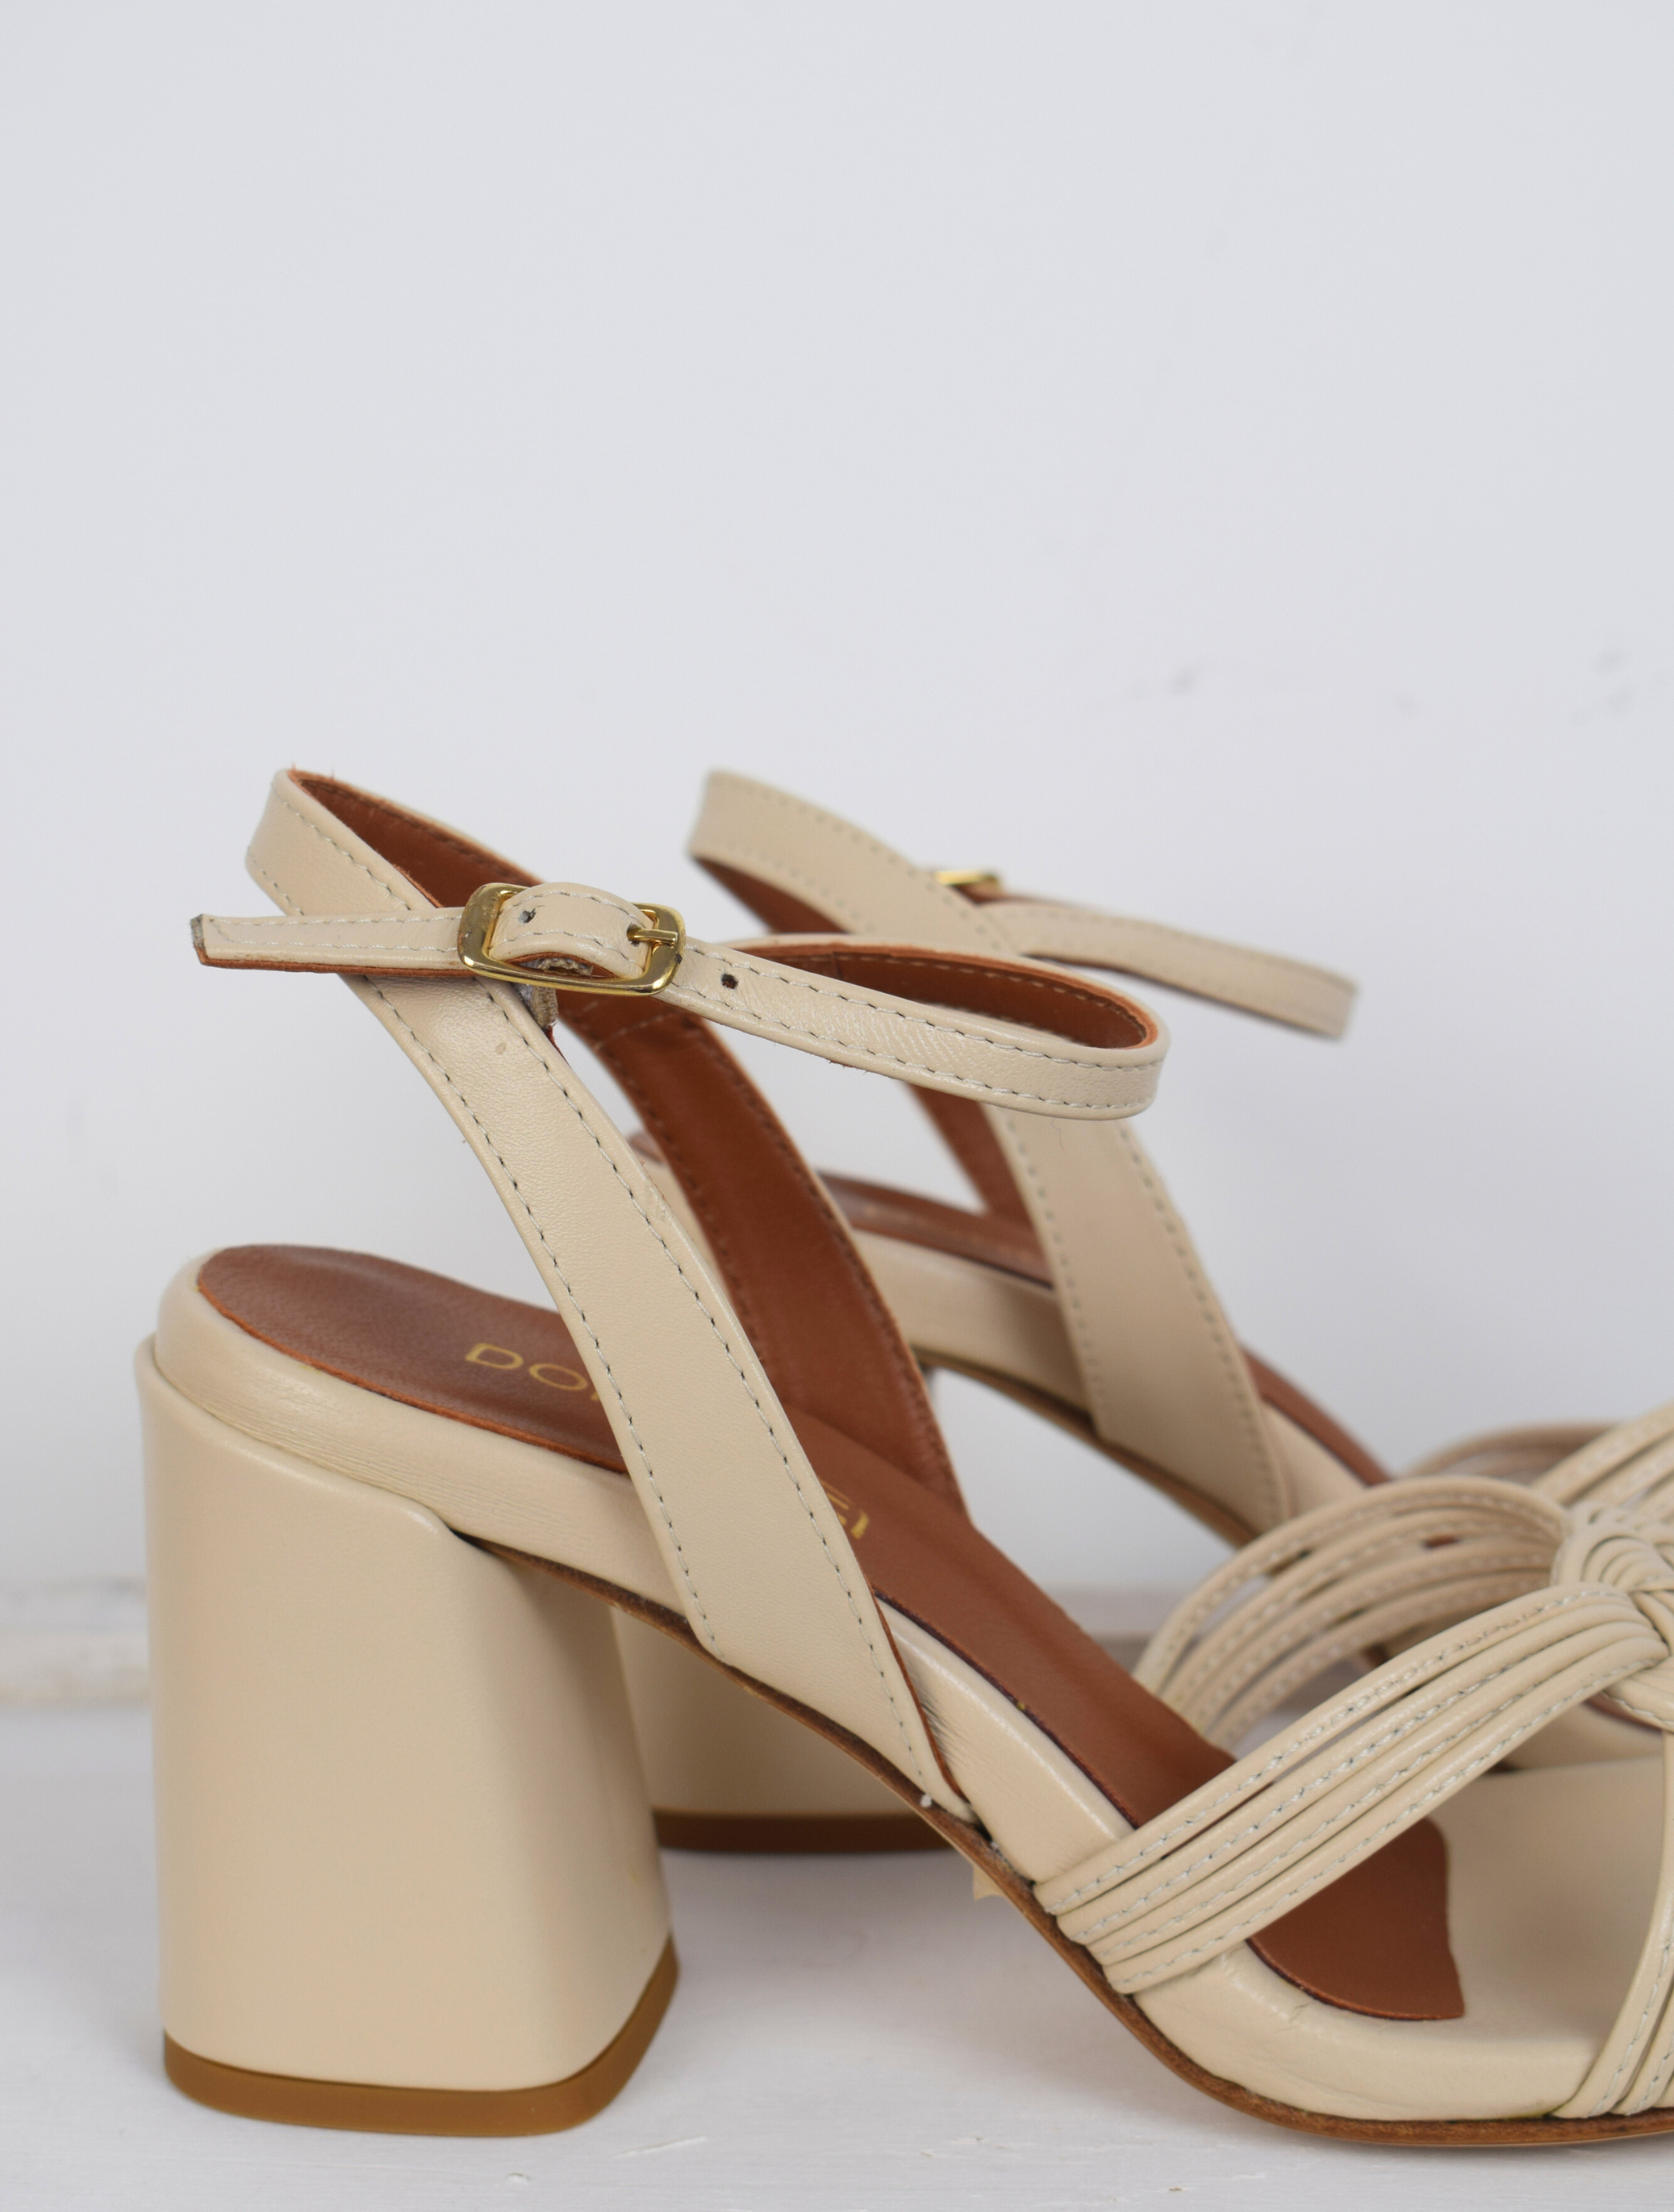 Cream strappy sandals with block heel